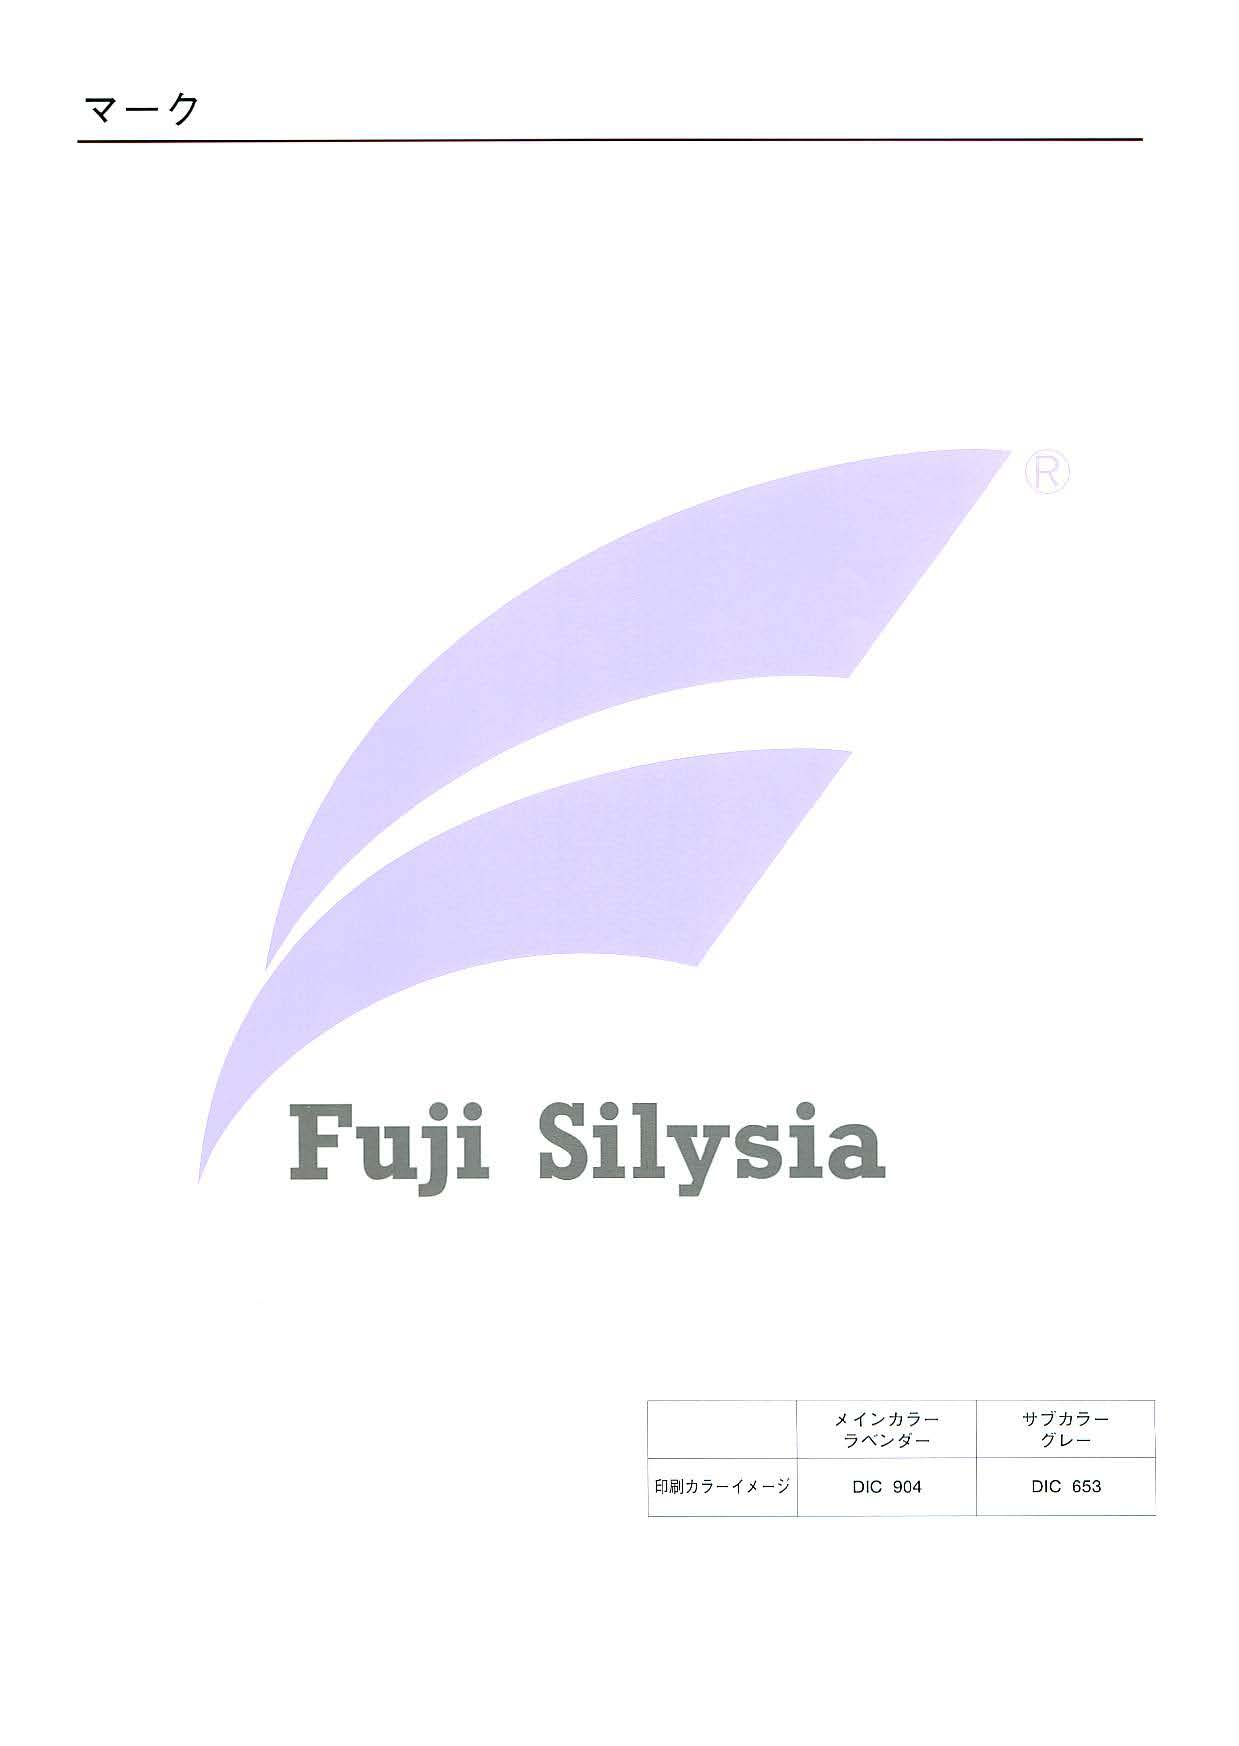 Fuji Silysia Chemical Ltd._logo